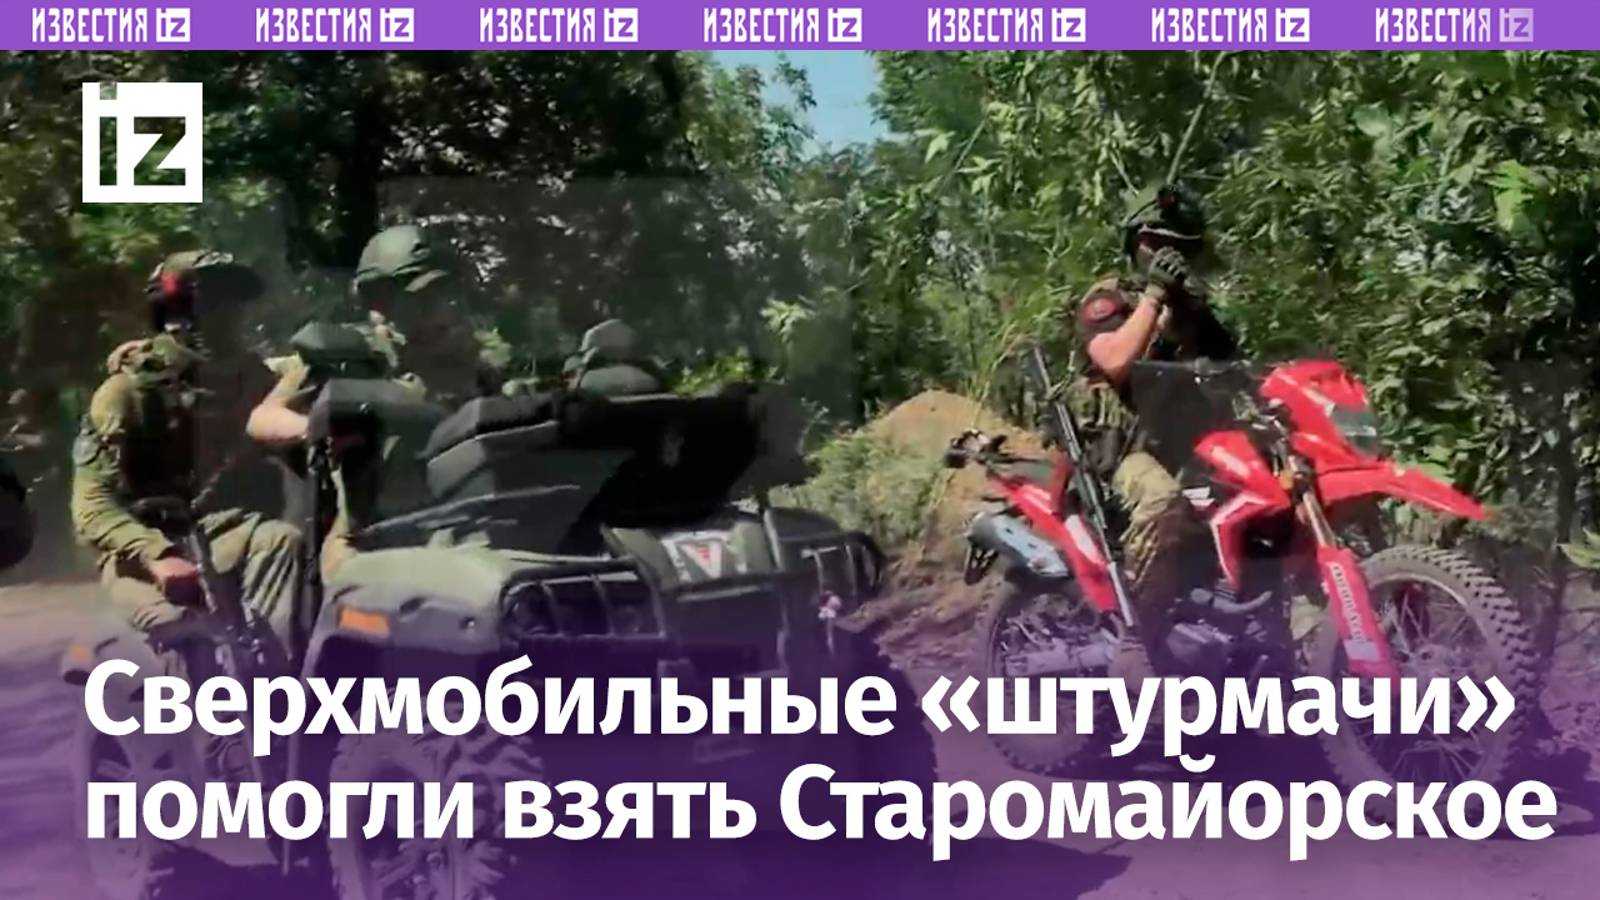 Дерзкий штурм опорника ВСУ на мотоциклах: наши бойцы-«байкеры» - как брали штурмом Старомайорское